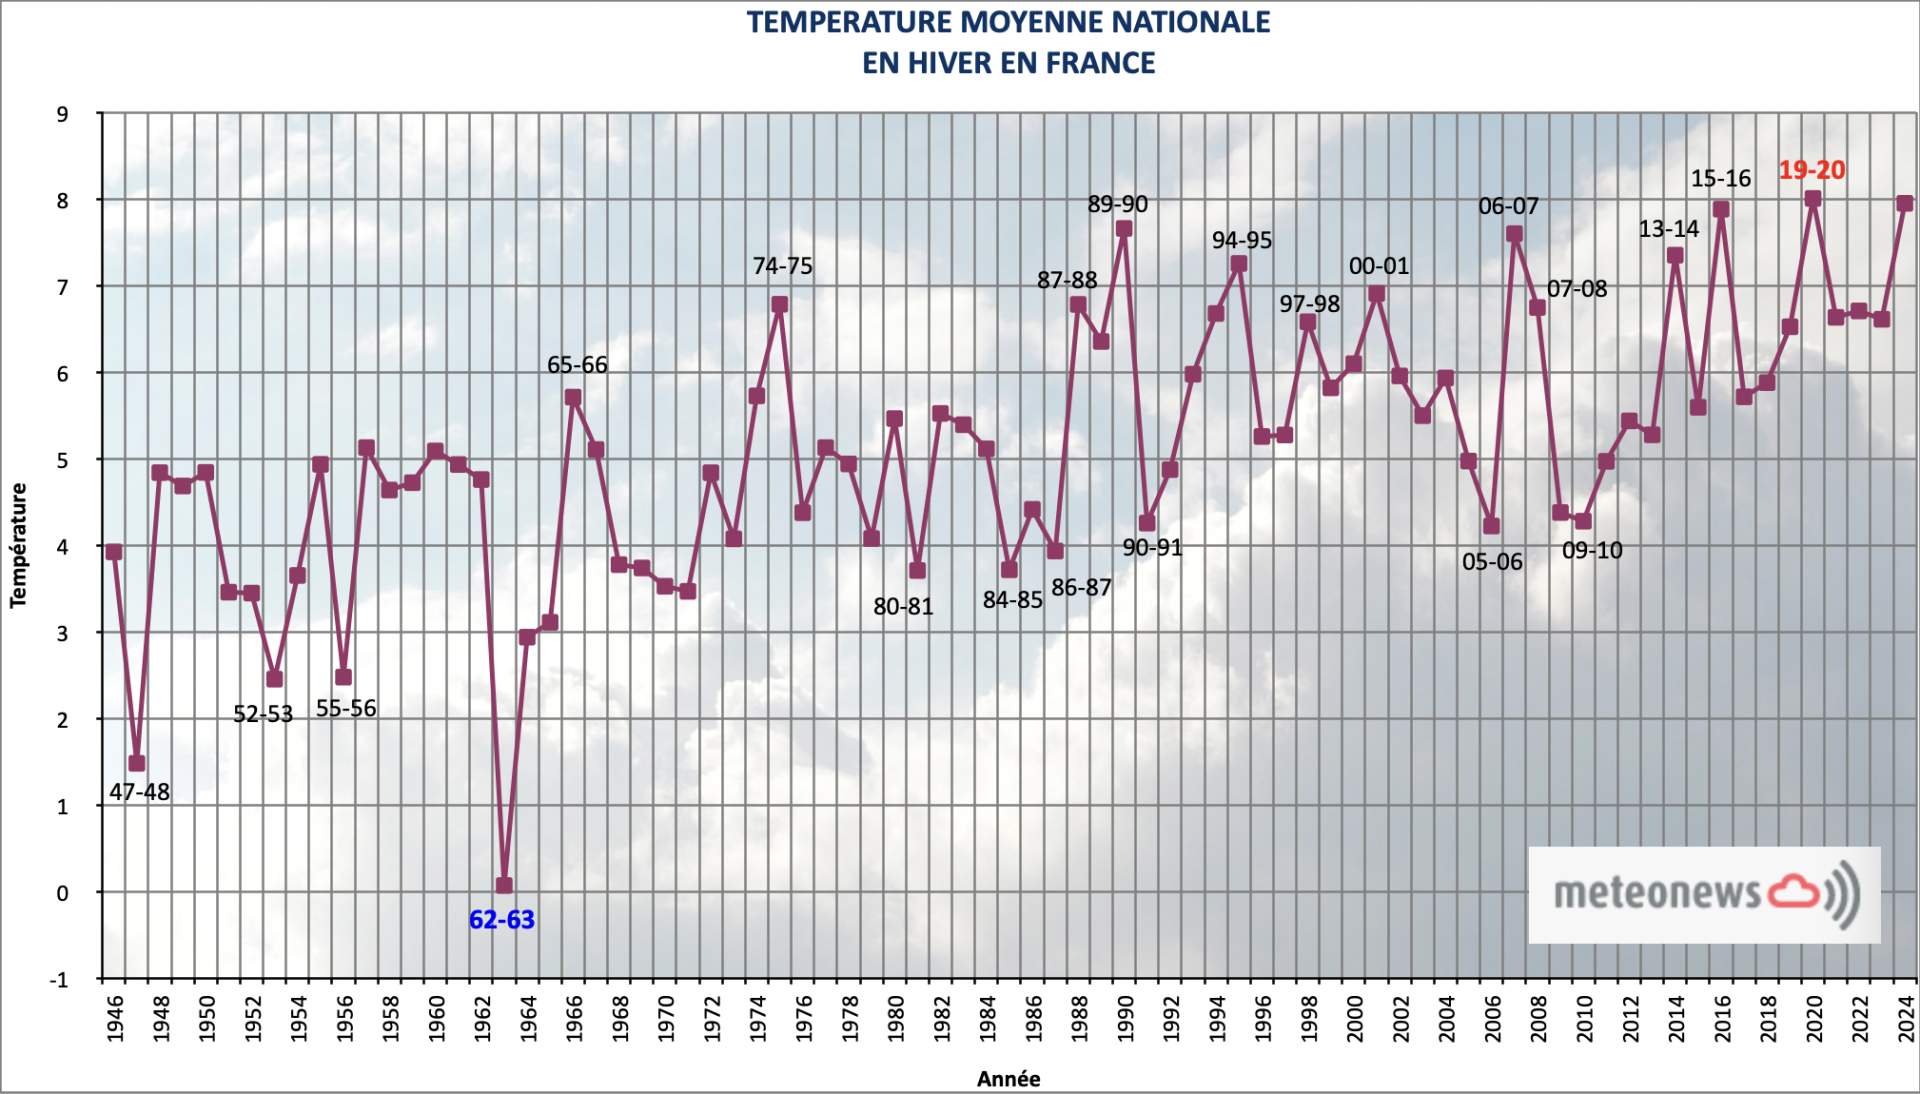 Fig. 1: Température moyenne nationale en hiver en France; Source: MeteoNews